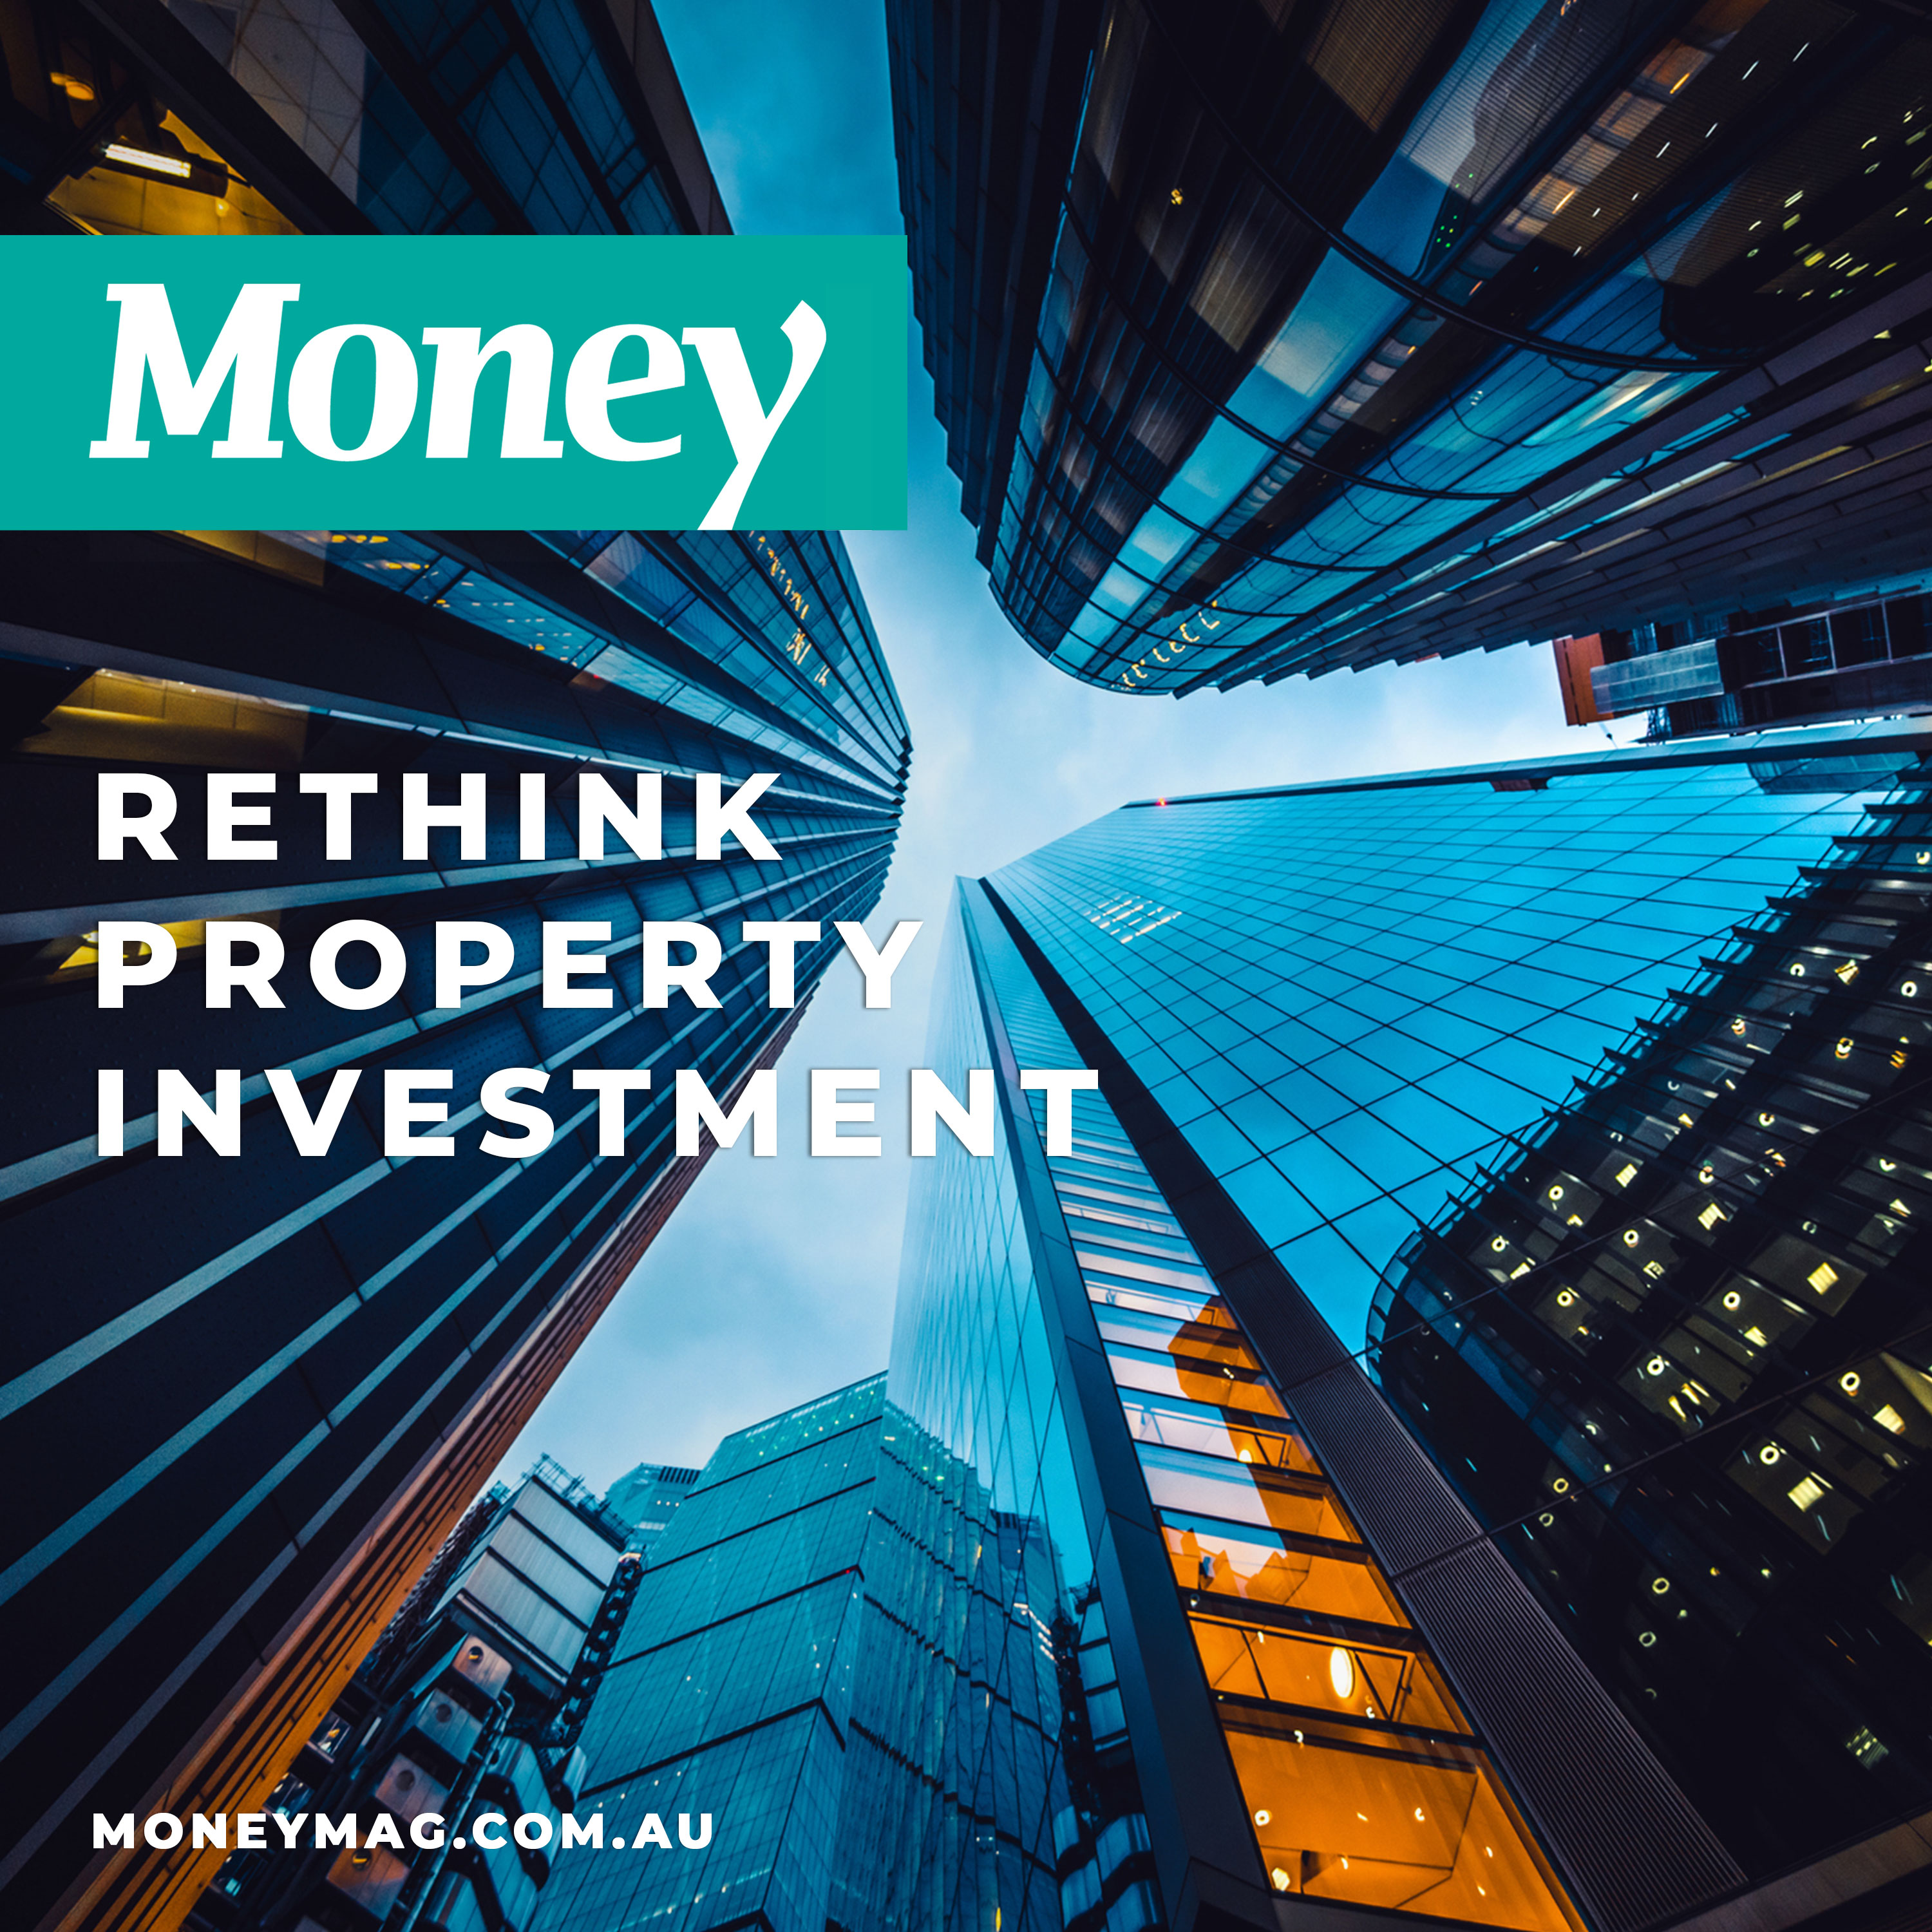 Rethink property investment